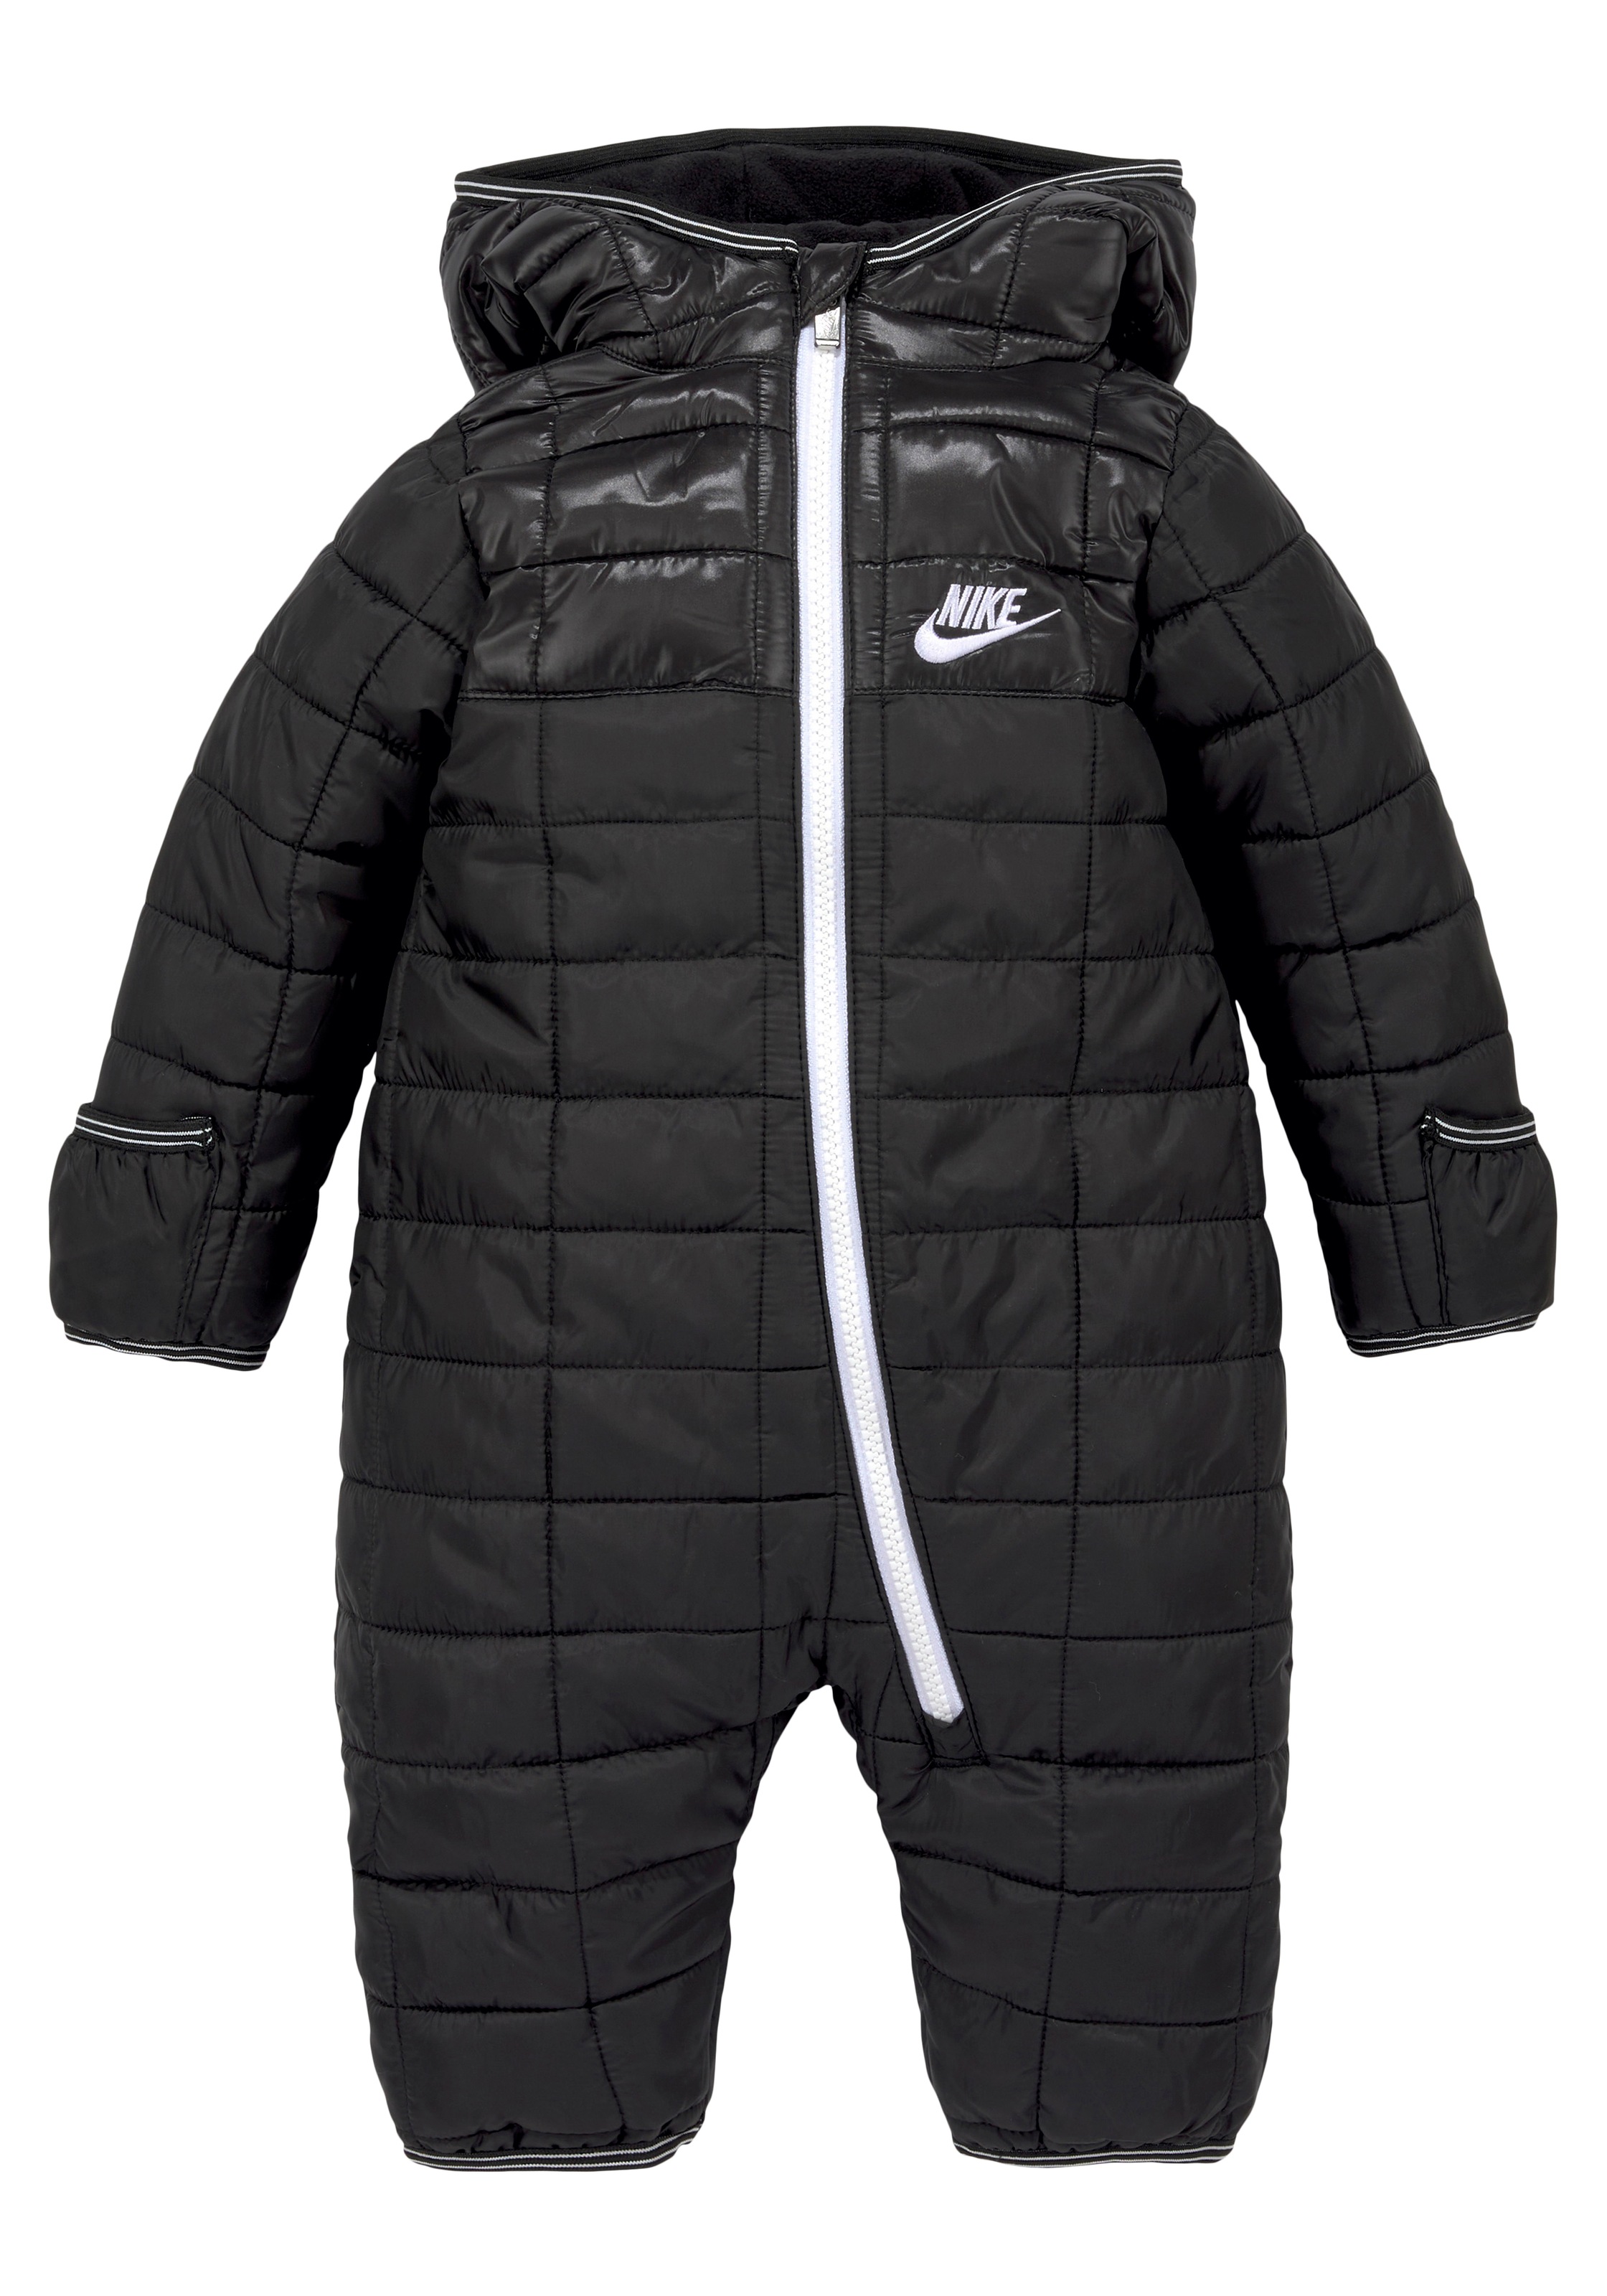 »COLORBLOCK Schneeoverall SNOWSUIT« OTTO Sportswear kaufen Nike bei